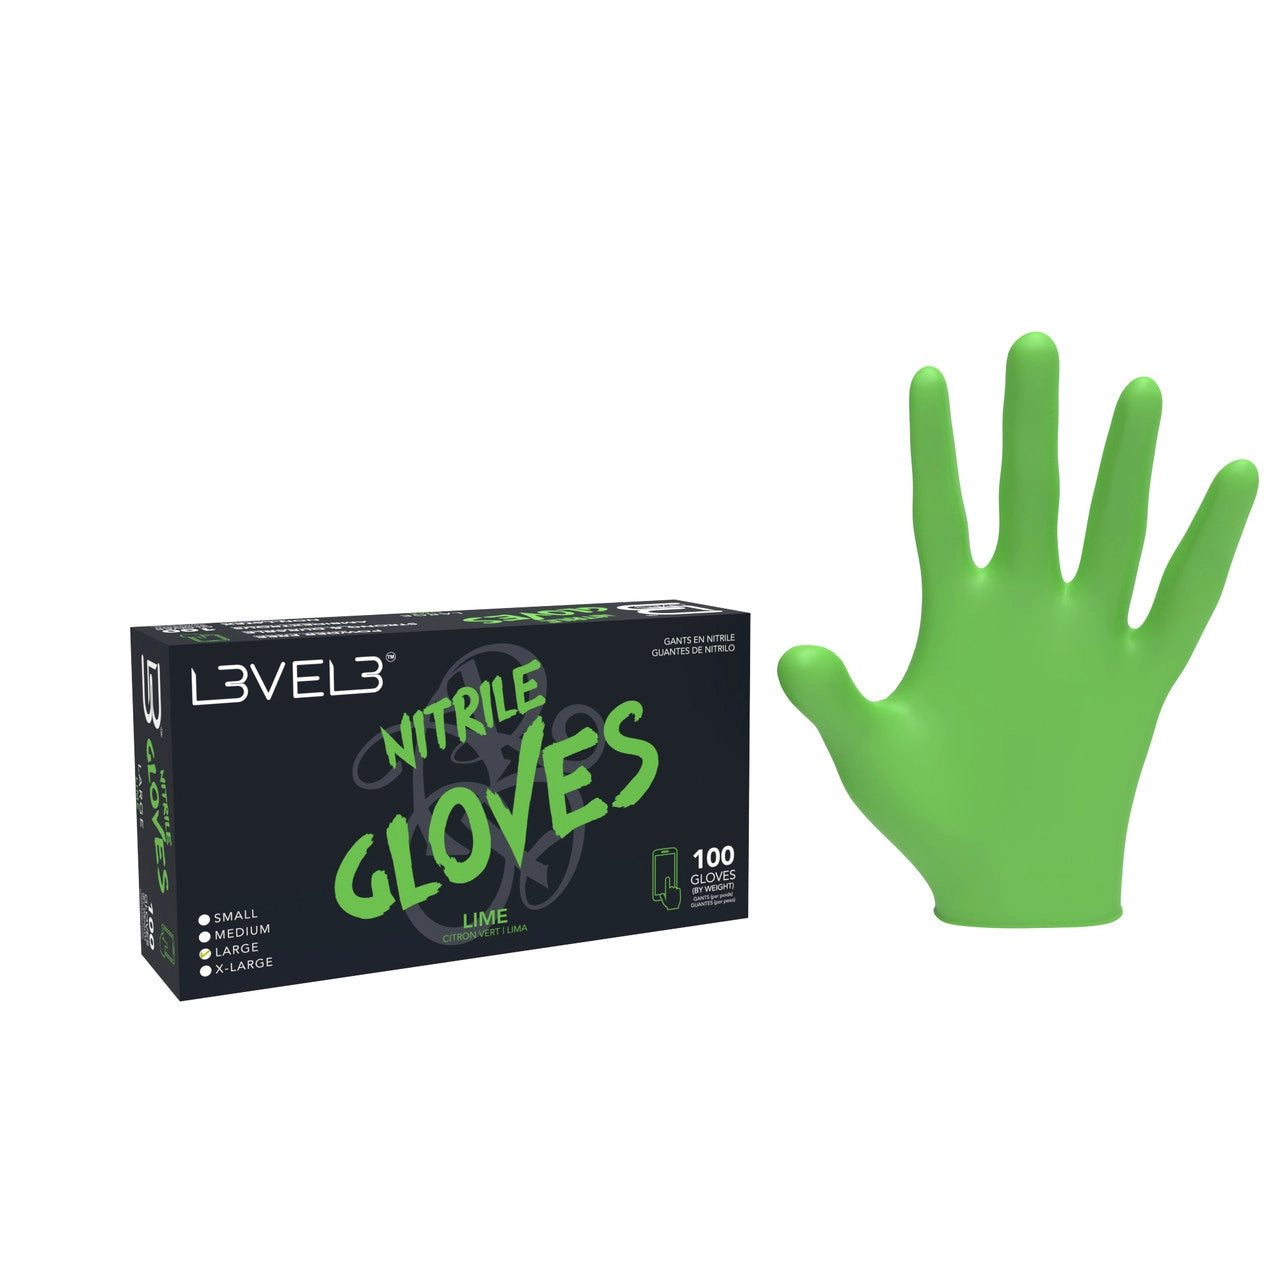 Level 3 Nitrile Gloves in Green